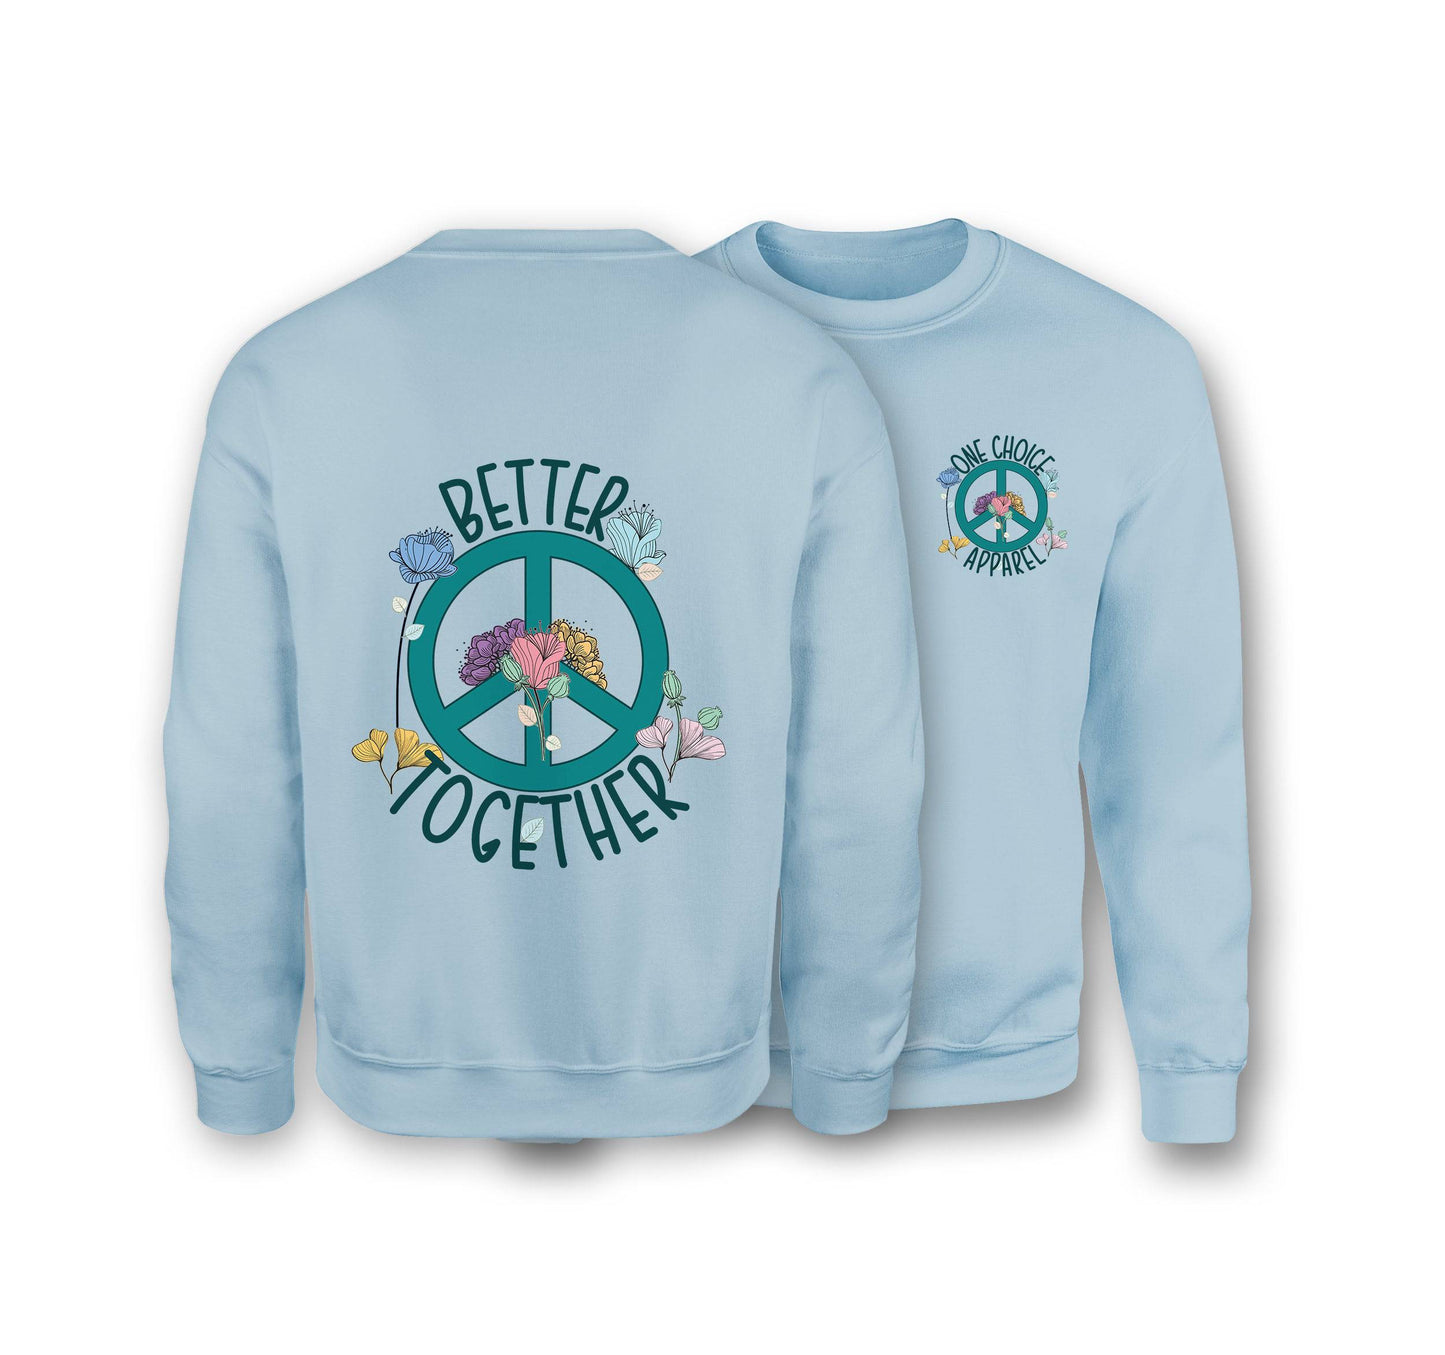 Better Together Sweatshirt - Organic Cotton Sweatshirt - One Choice Apparel